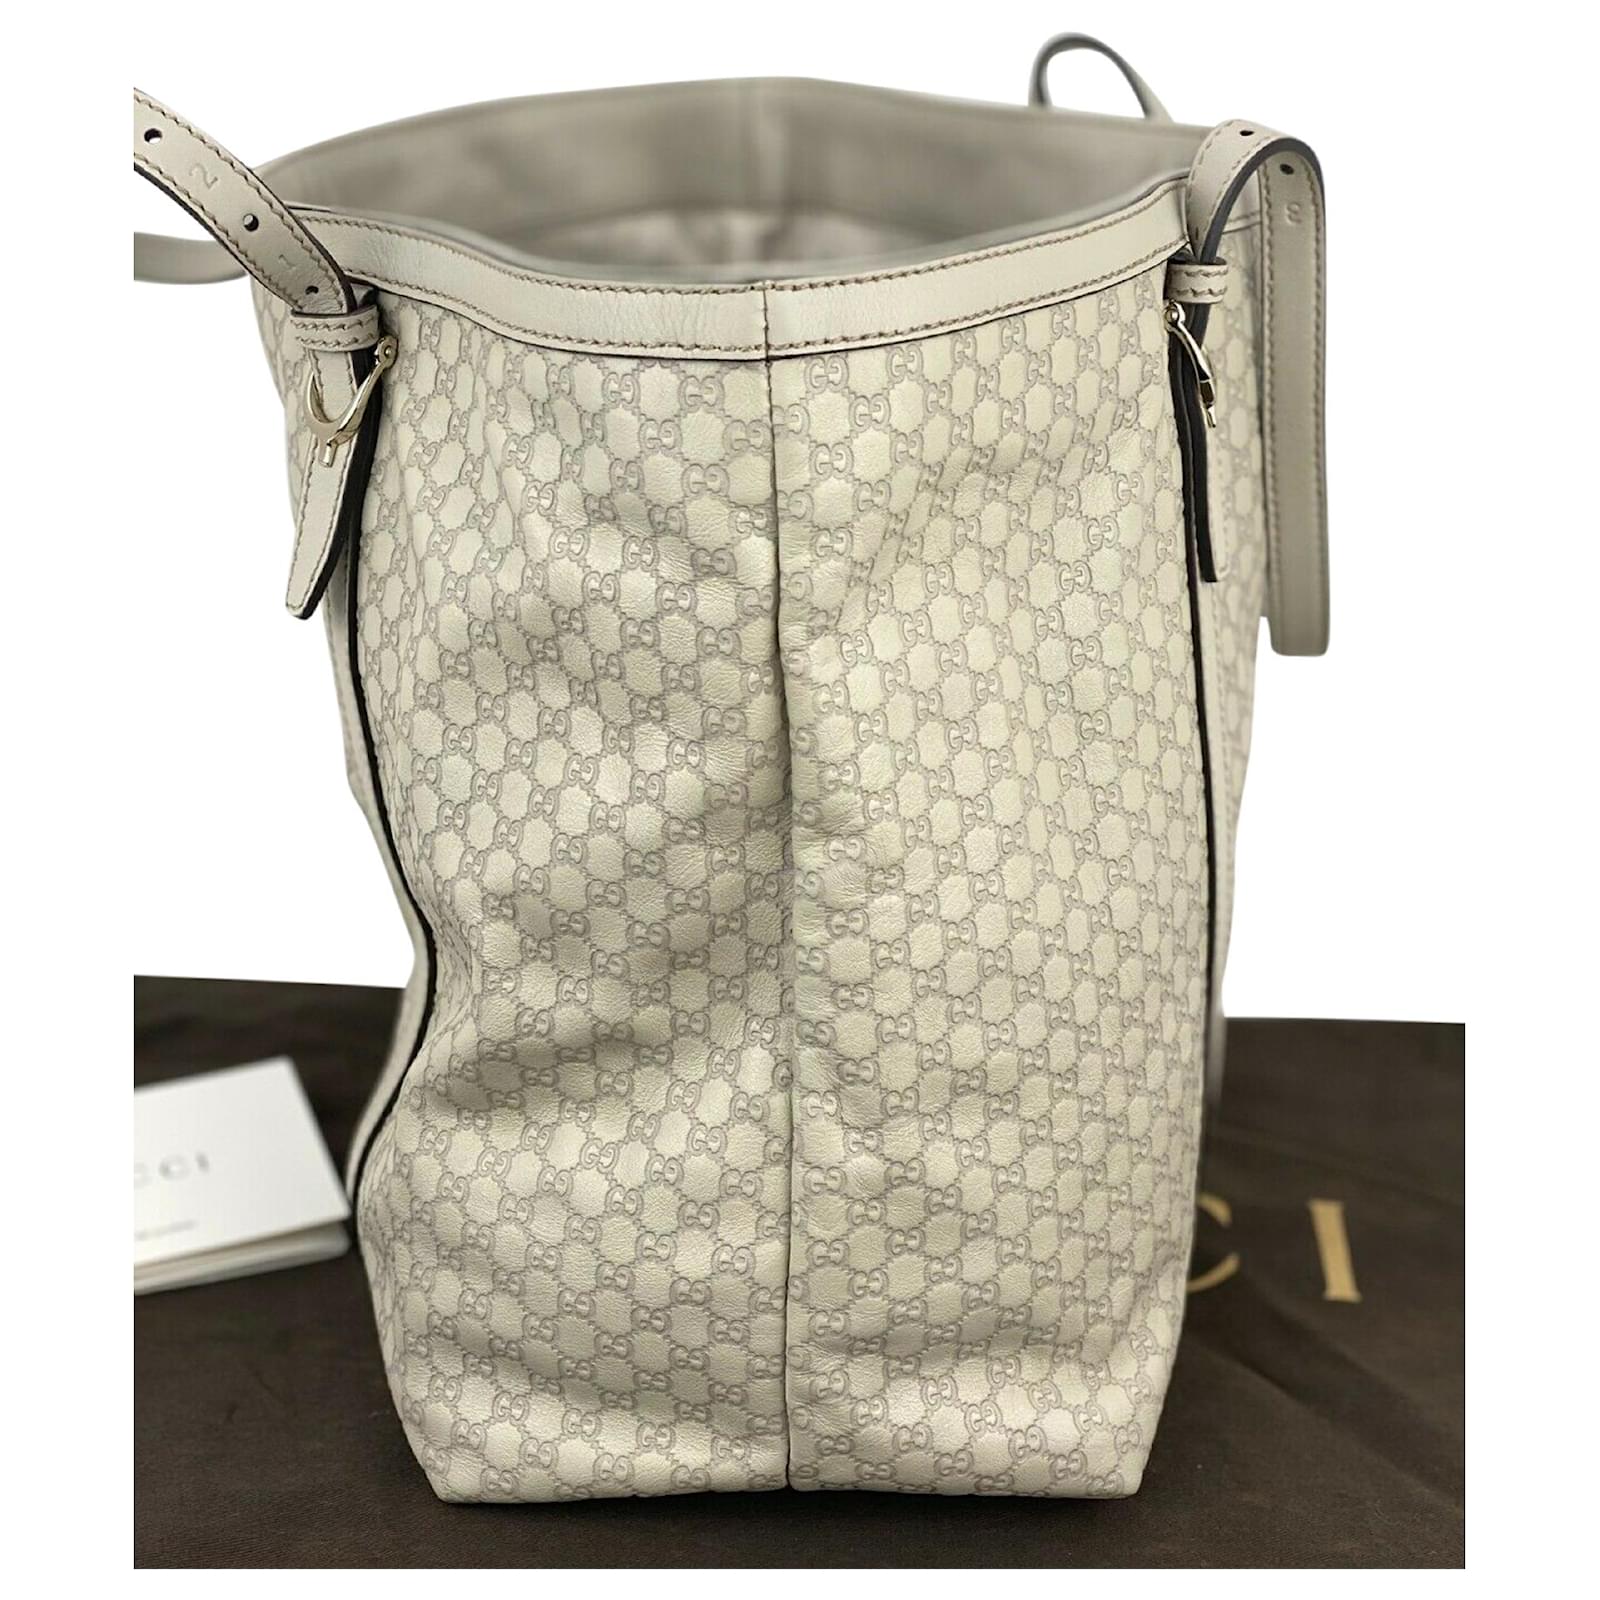 Gucci Micro Guccissima Nice Tote Bag Leather White Light Grey Shoulder Bag